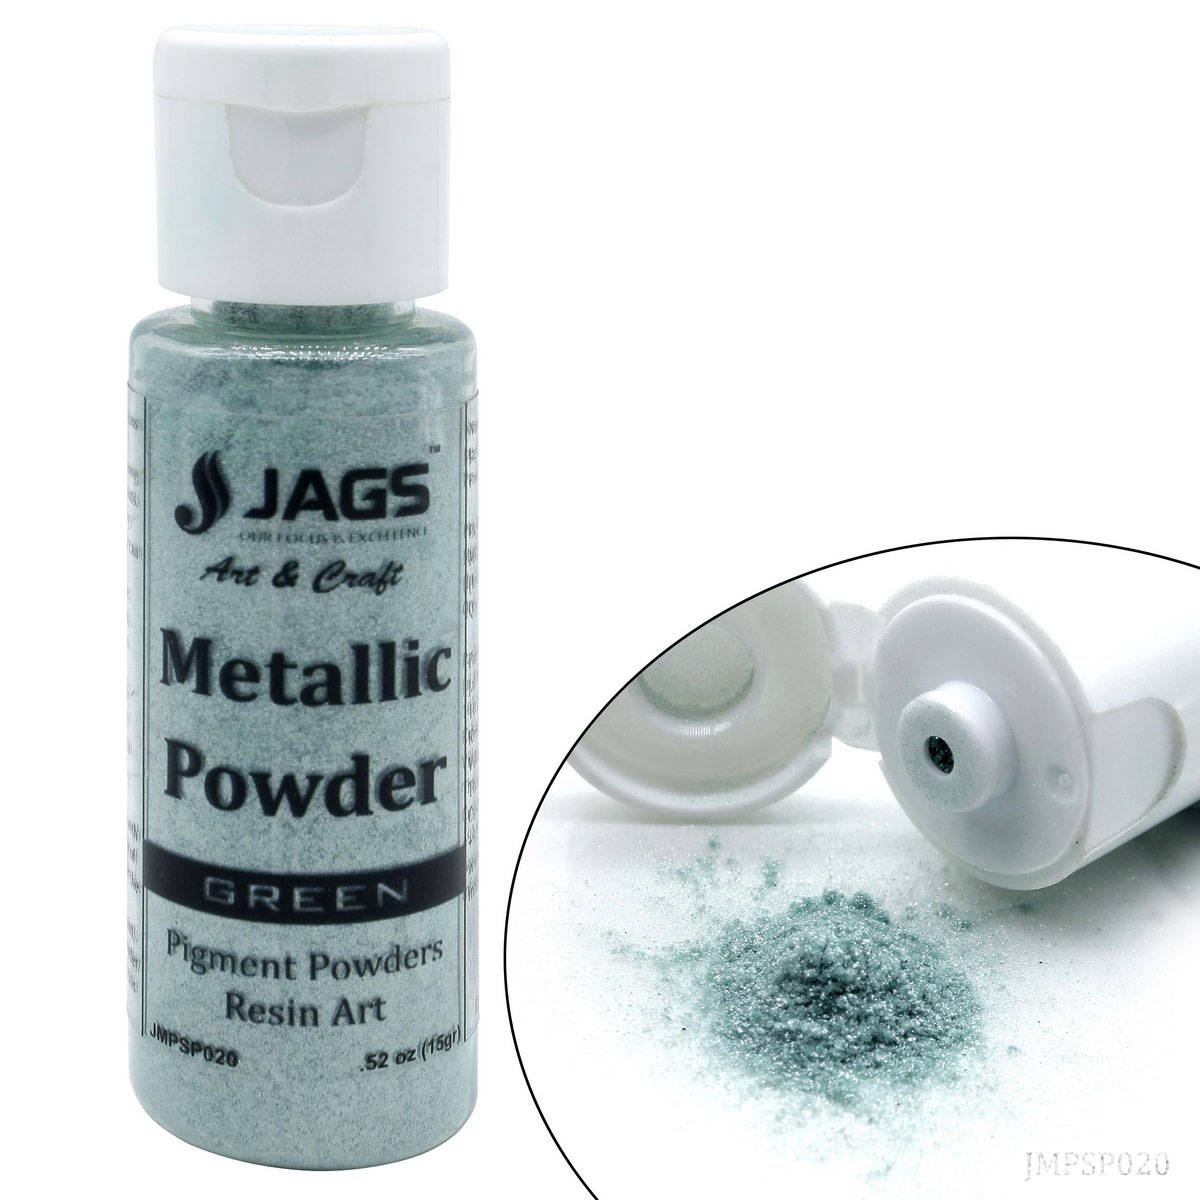 Jags Metallic Powder Green 15Gms JMPSP020